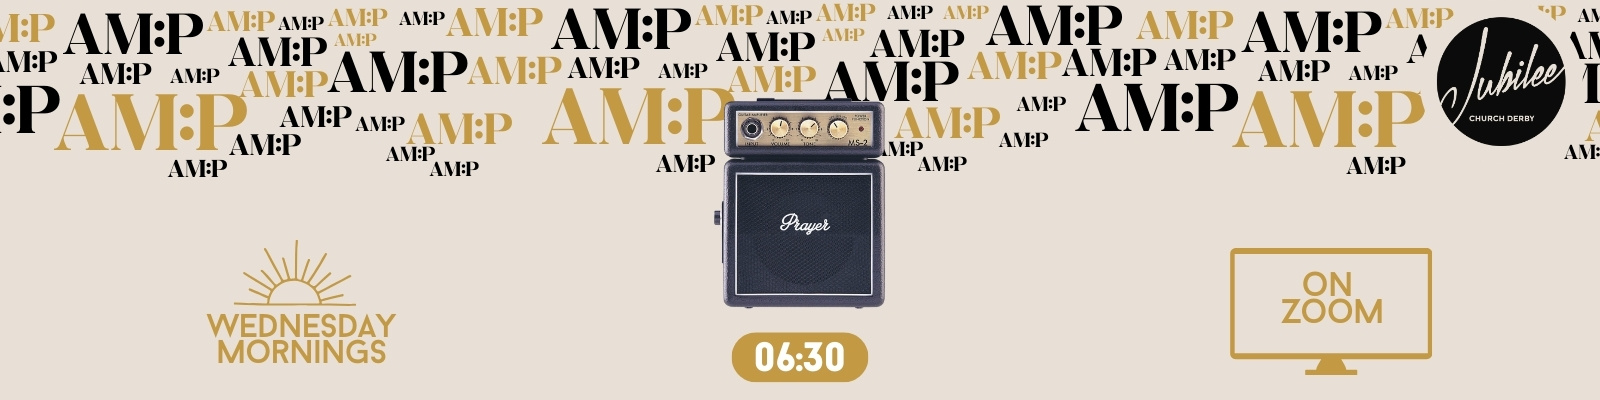 Amp-Prayer